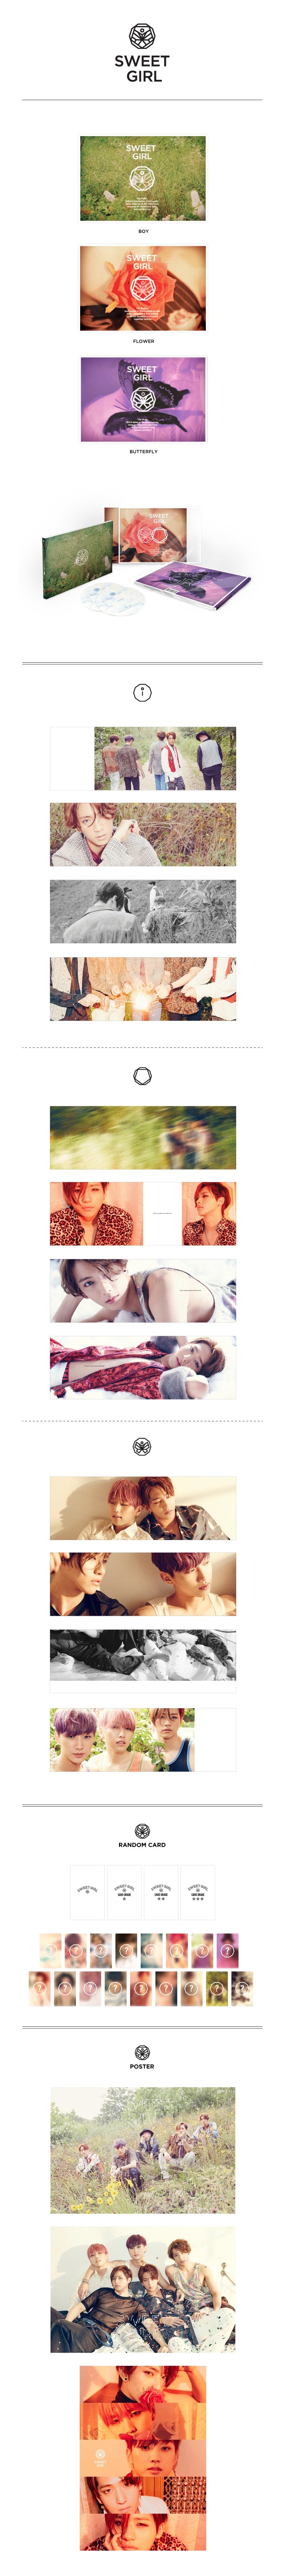 B1A4 Mini Album Vol. 6 - Sweet Girl (Random Version)